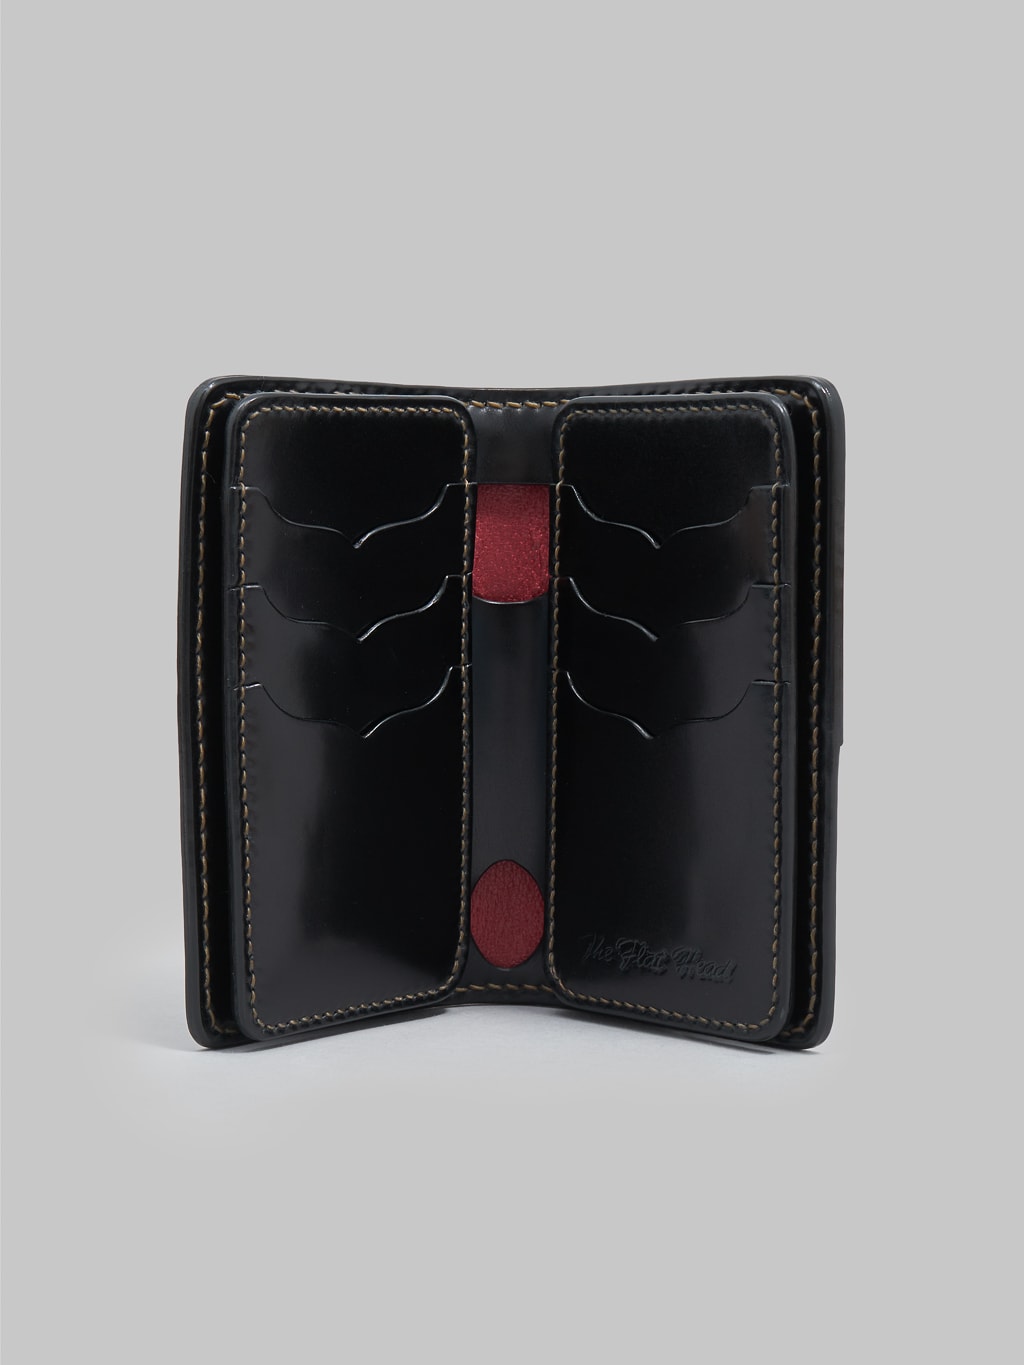 The Flat Head Handsewn Shinki Cordovan Mid Length Wallet Black  card slots